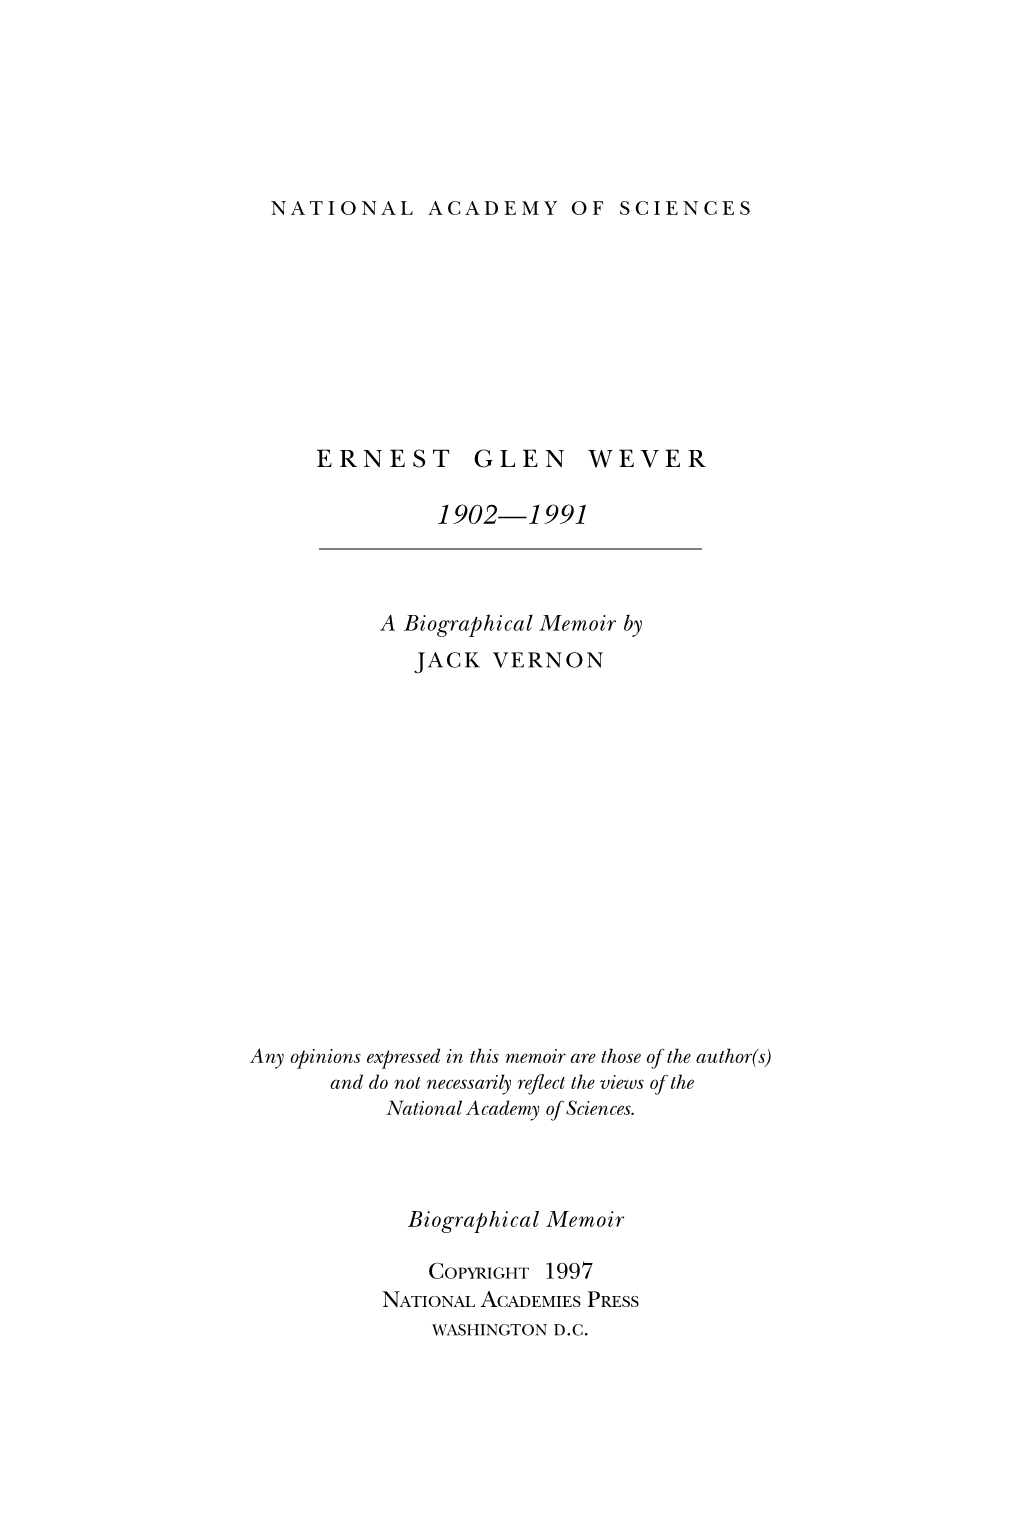 Ernest Glen Wever Biographical Memoir